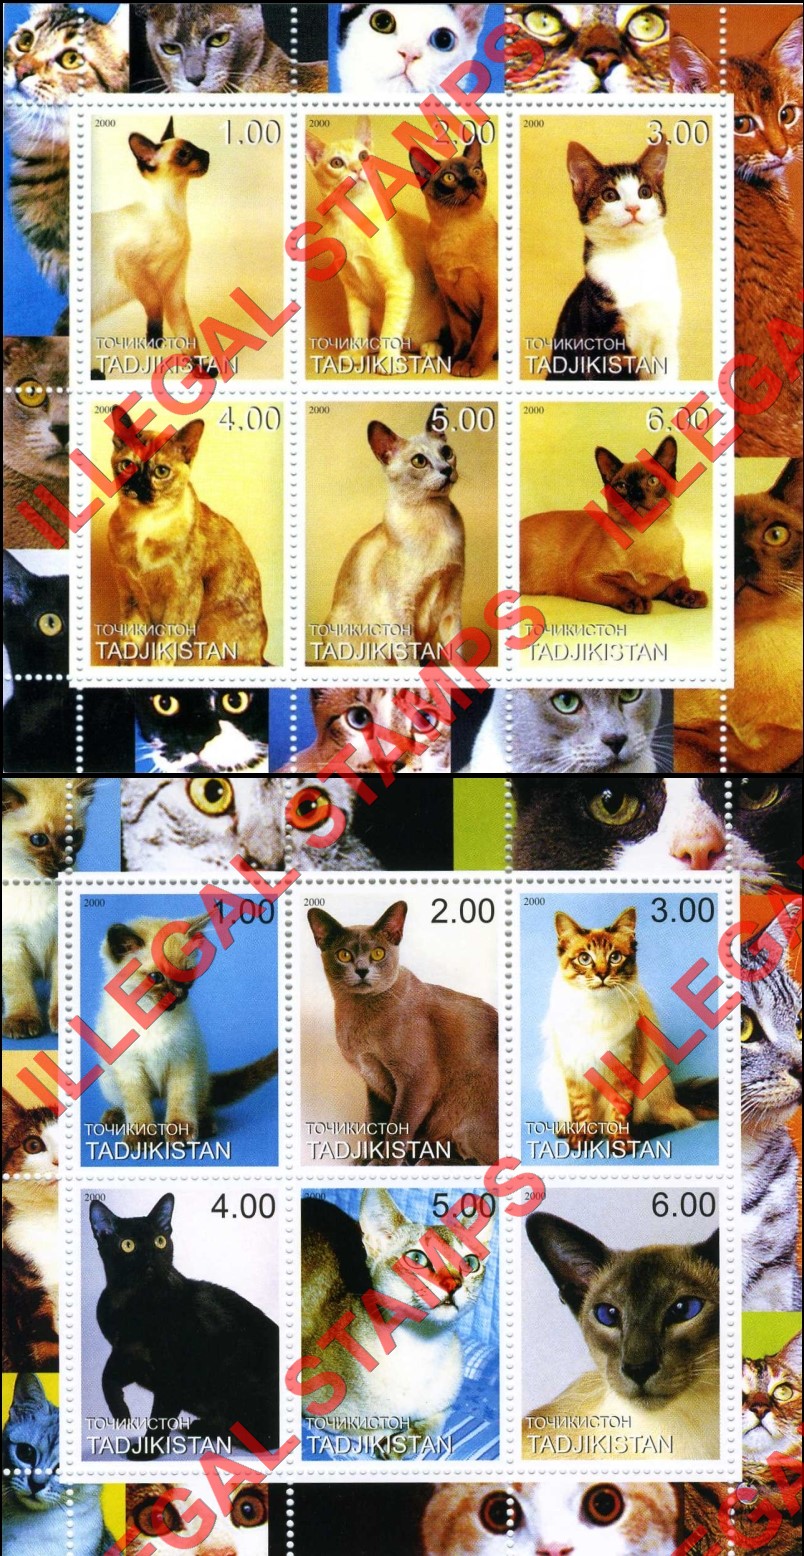 Tajikistan 2000 Cats Illegal Stamp Souvenir Sheets of 6 (Part 1)